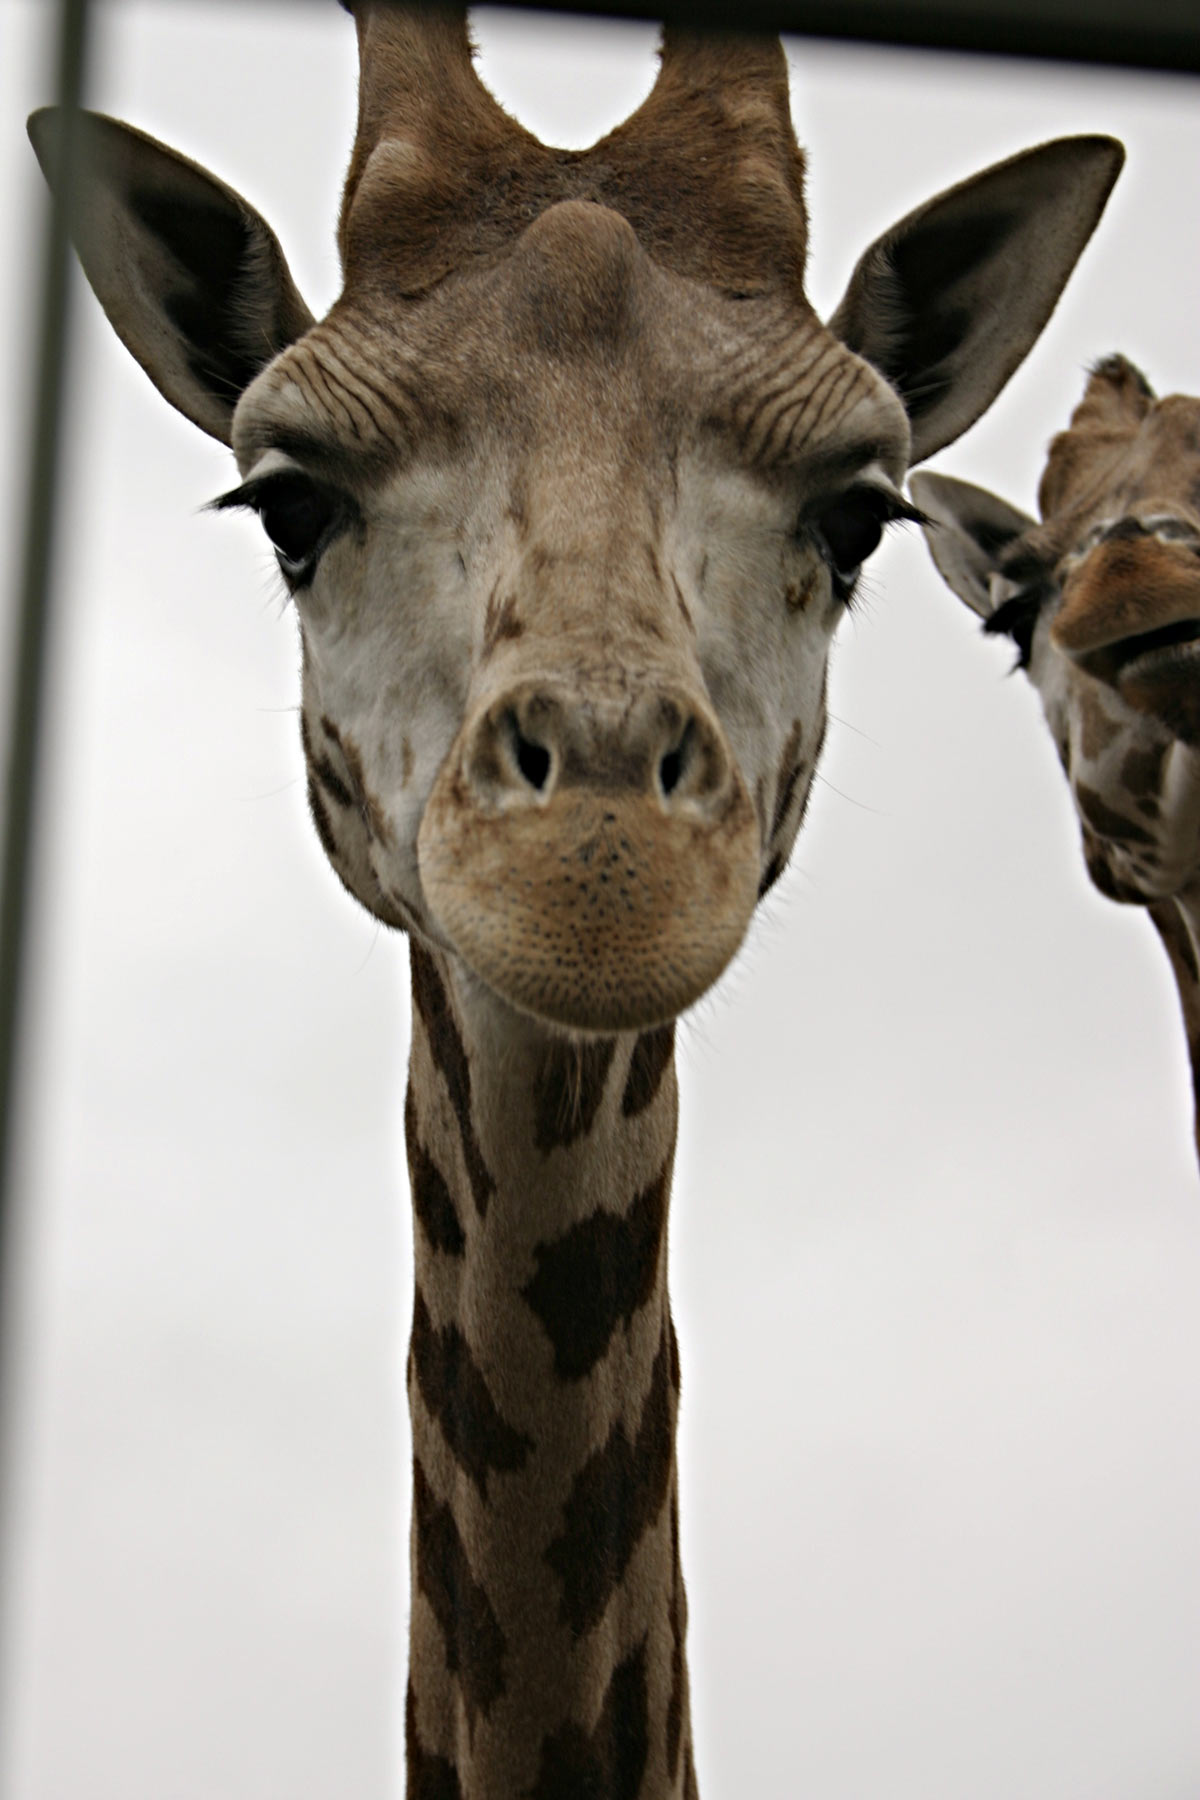 Giraf closeup photo